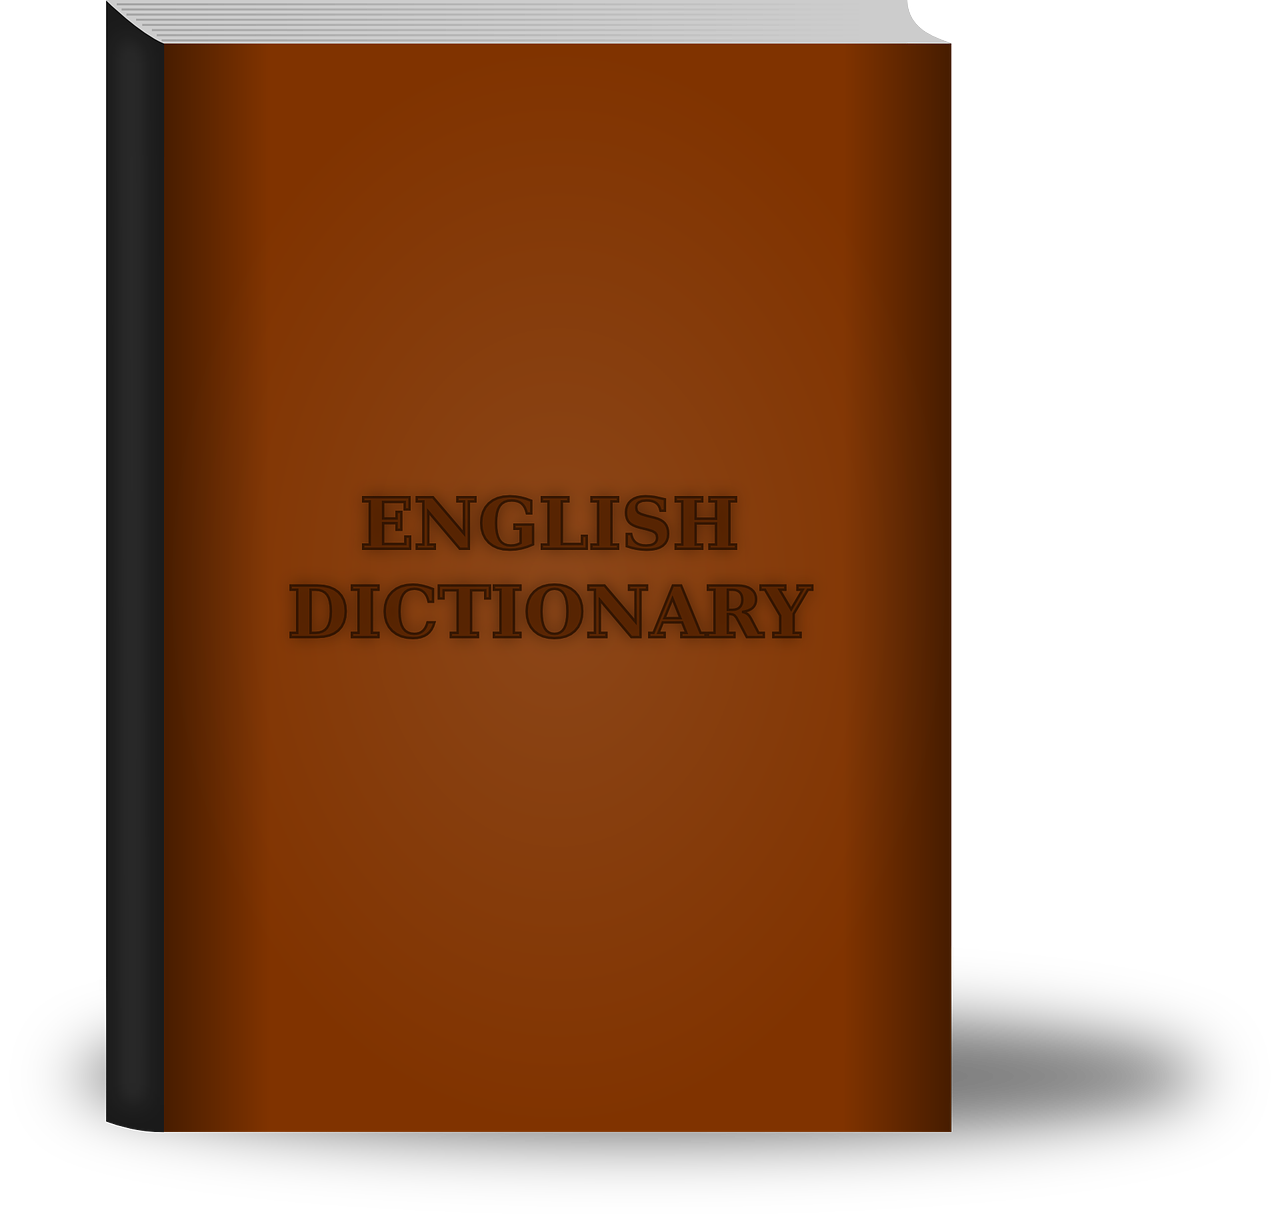 Dictionary,book,english,school,study - free image from needpix.com